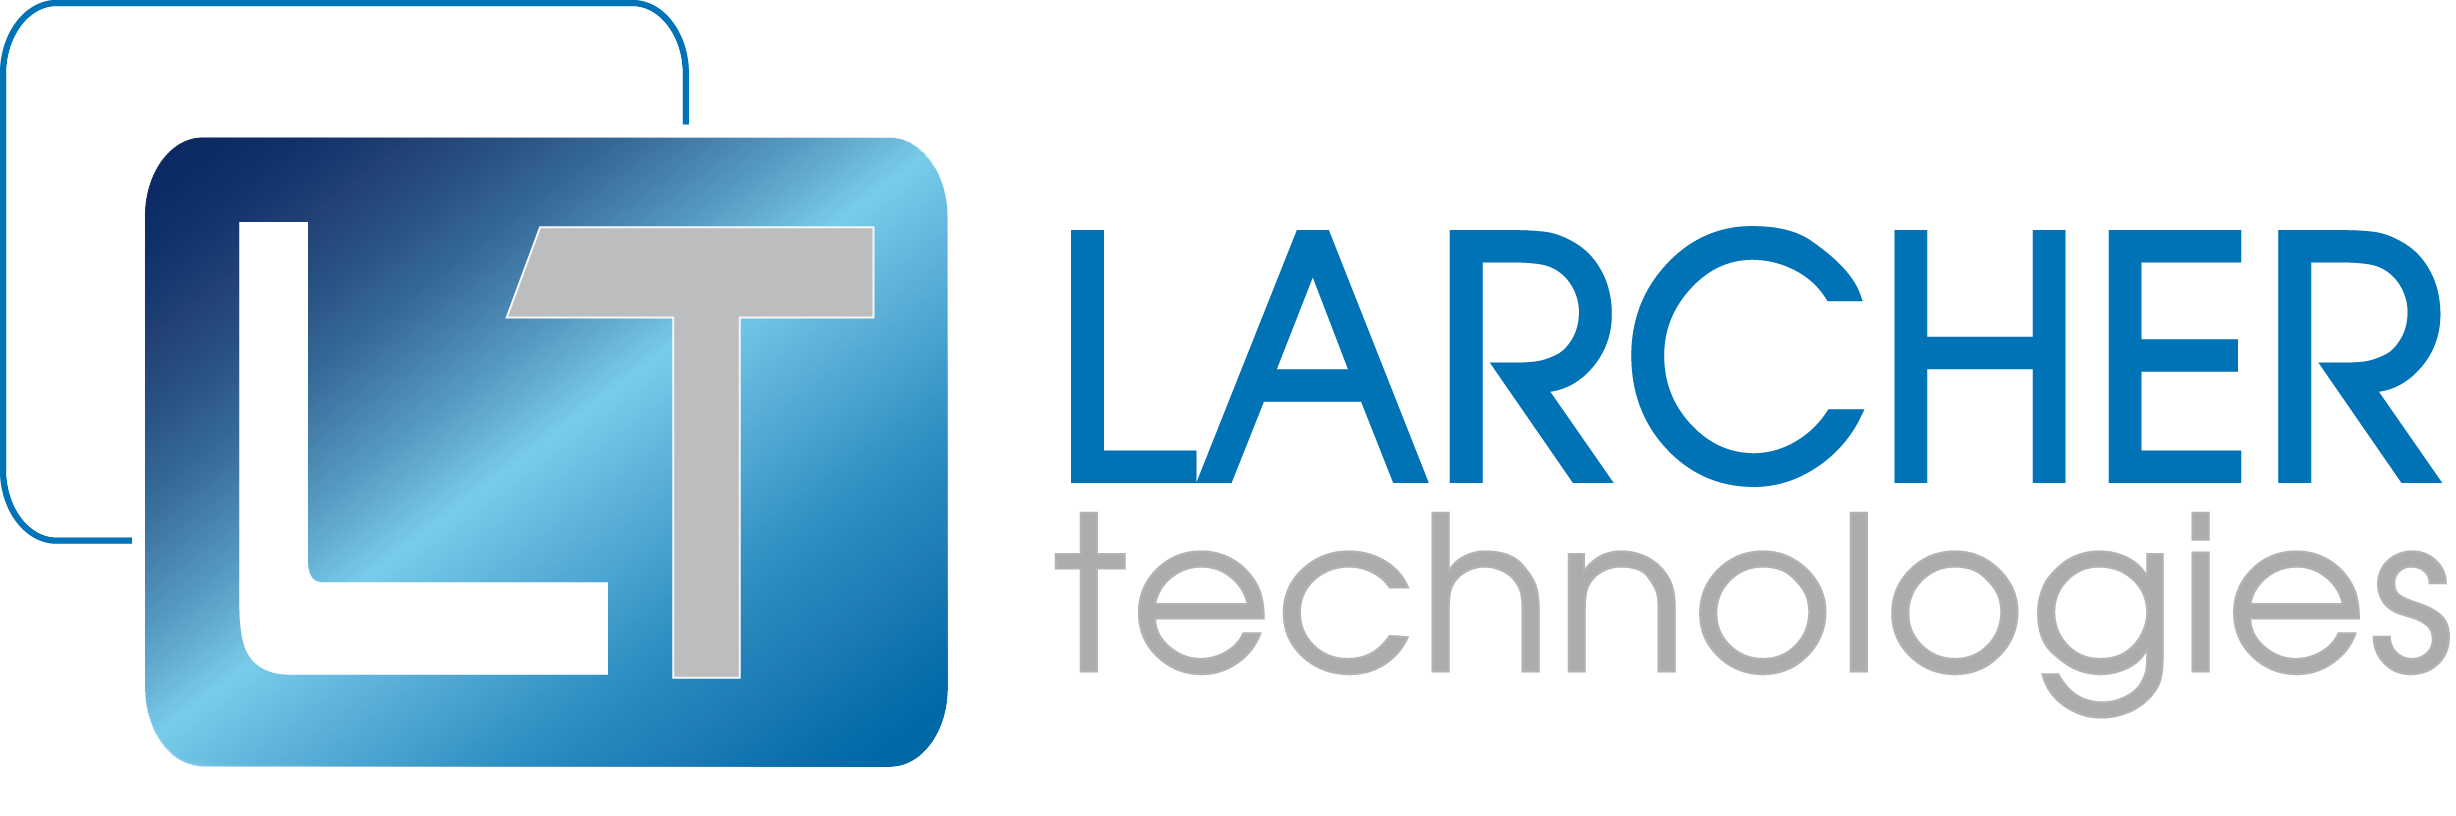 Larcher Technologies